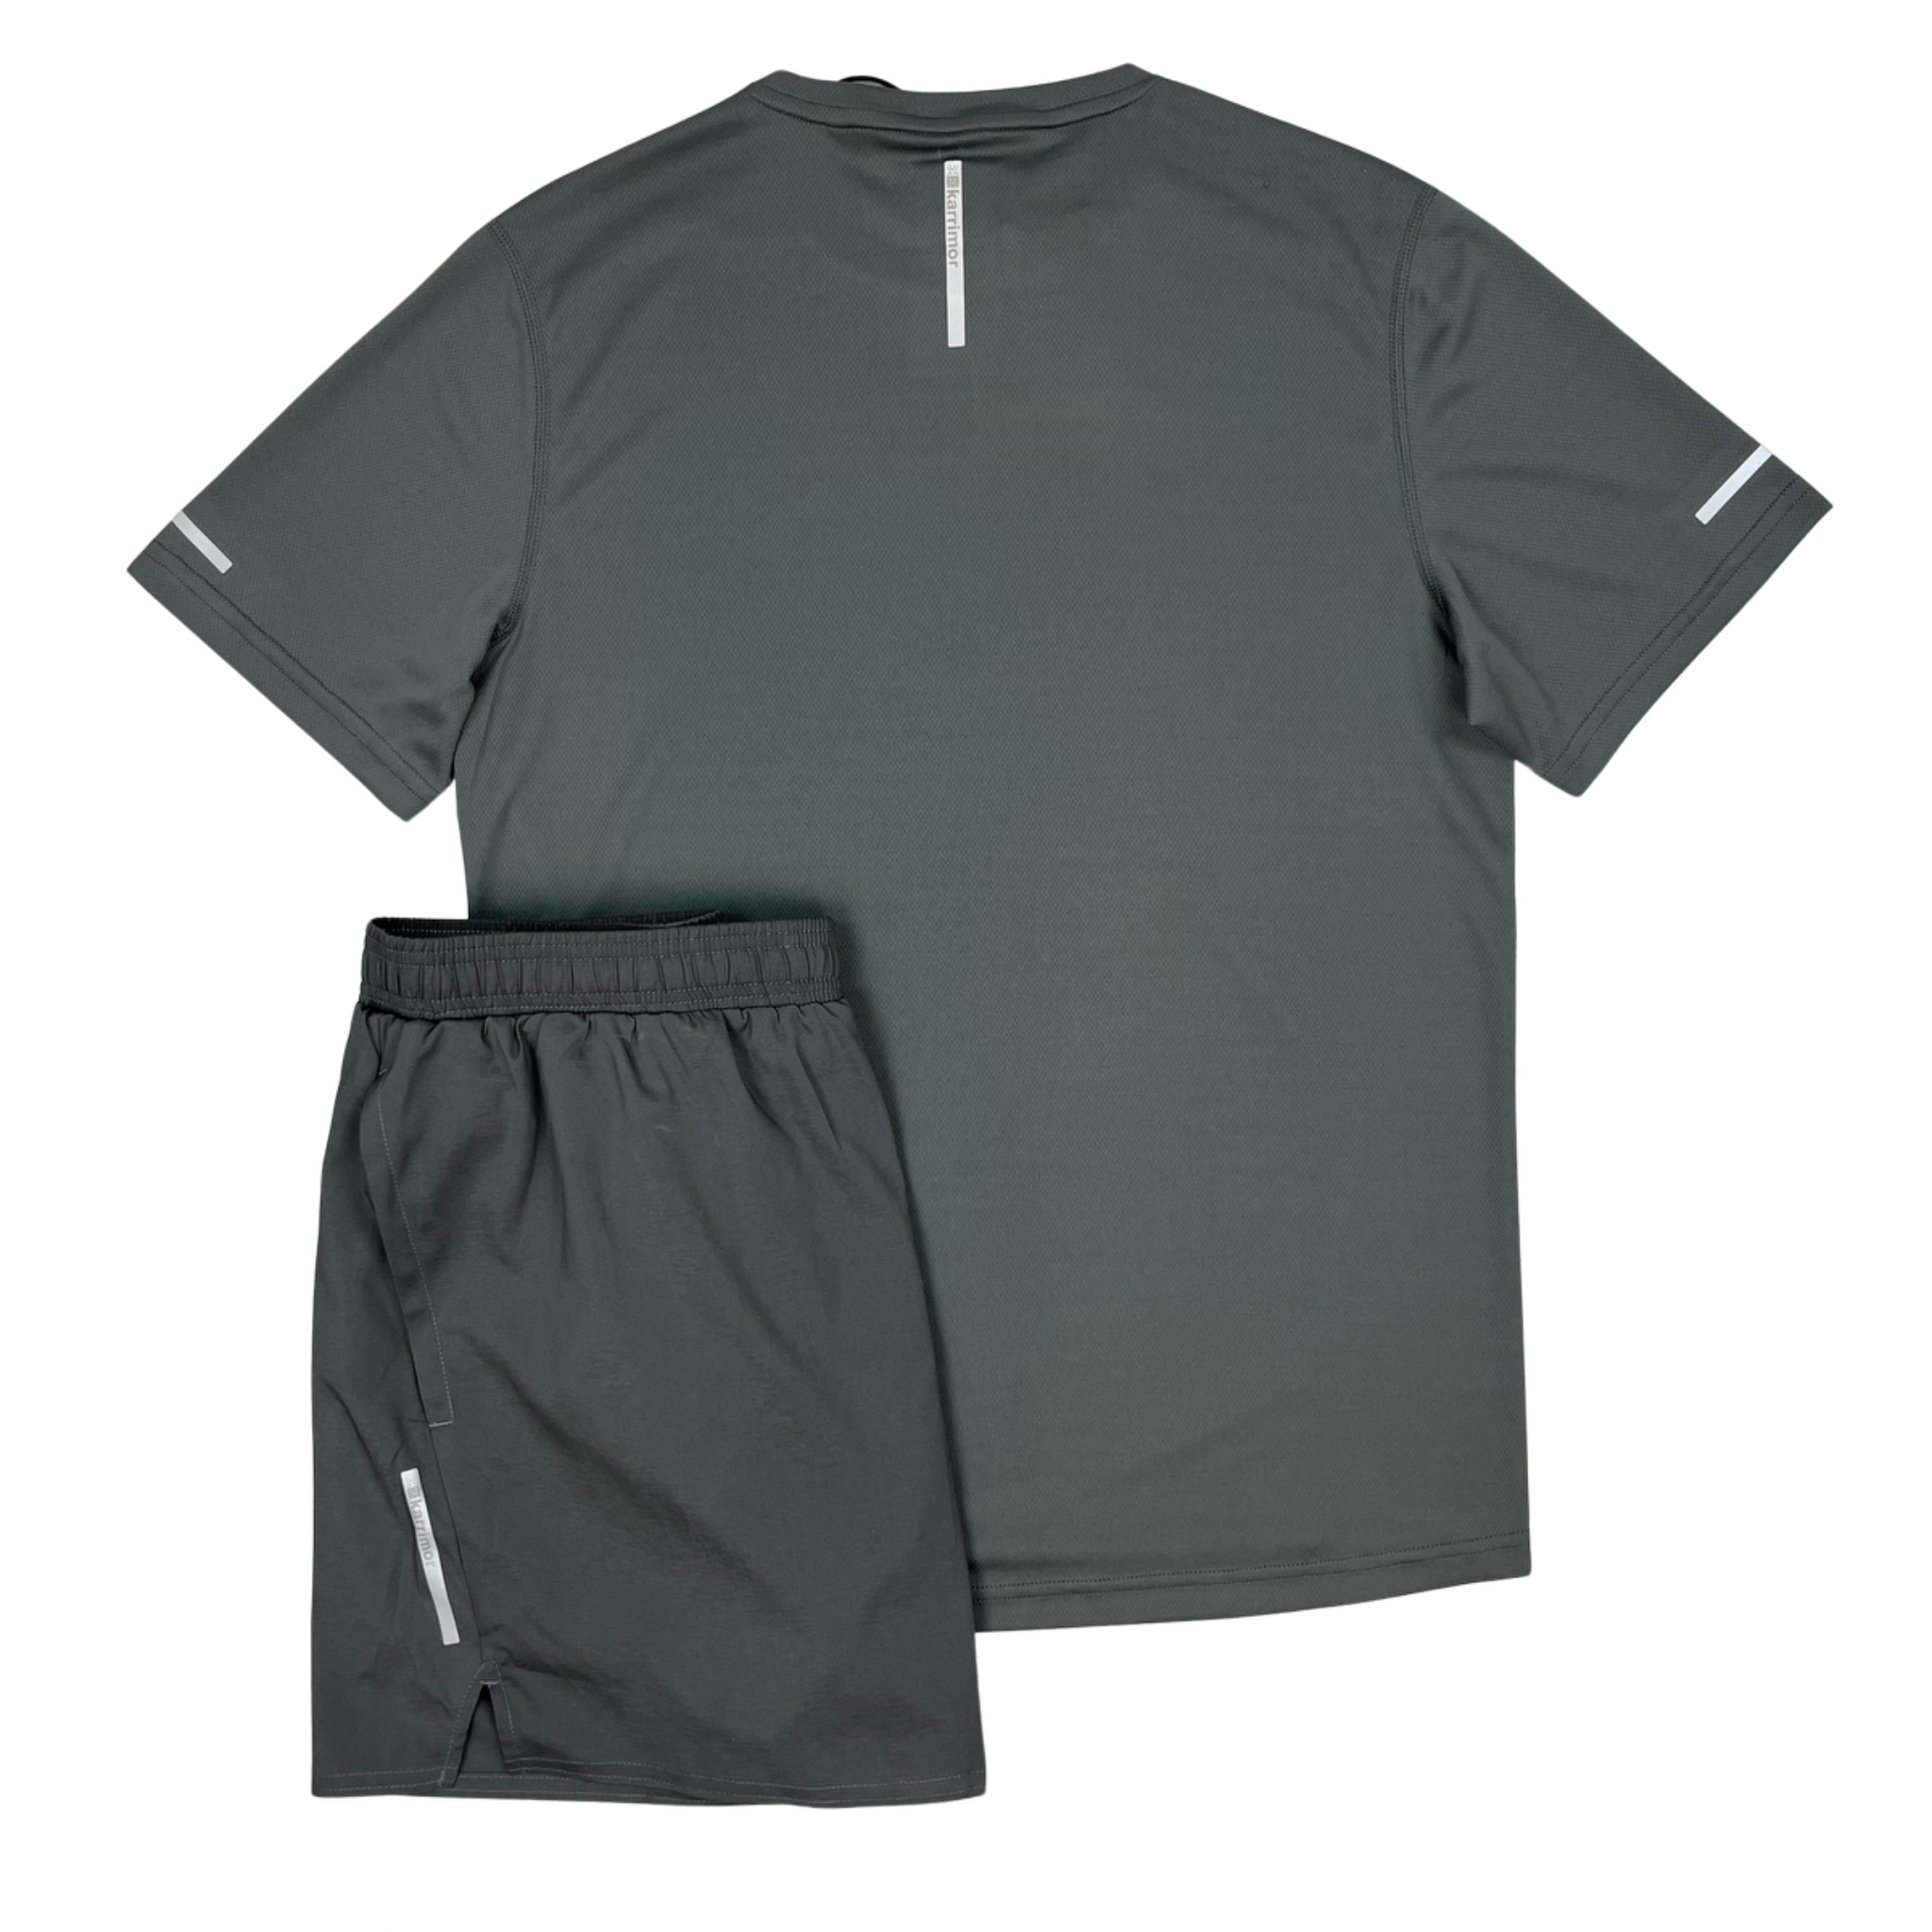 Karrimor Run T-Shirt / Shorts Set - Charcoal